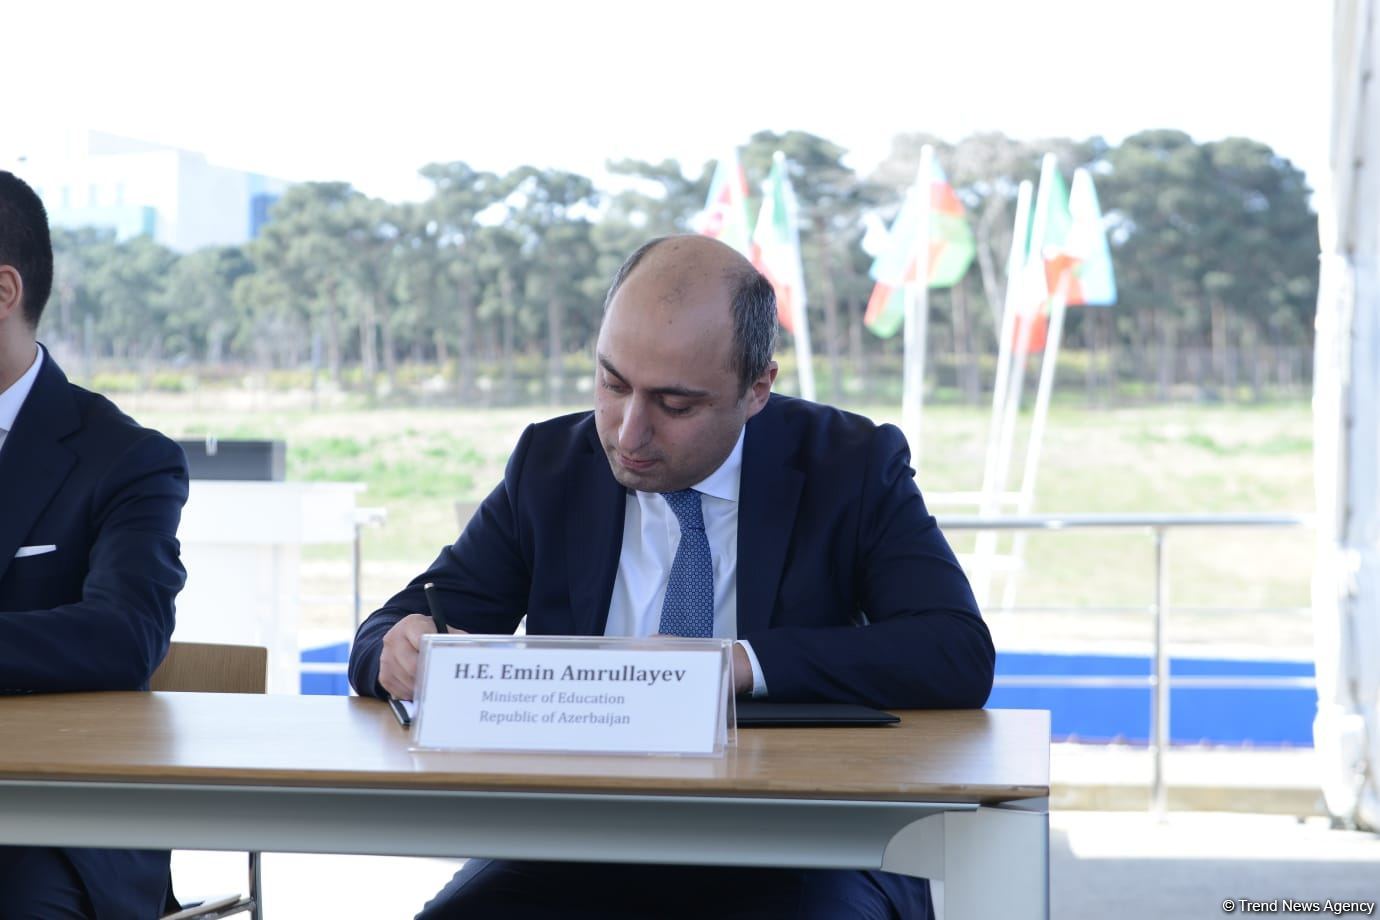 Azerbaijan, Italy sign document on building joint university (PHOTO)